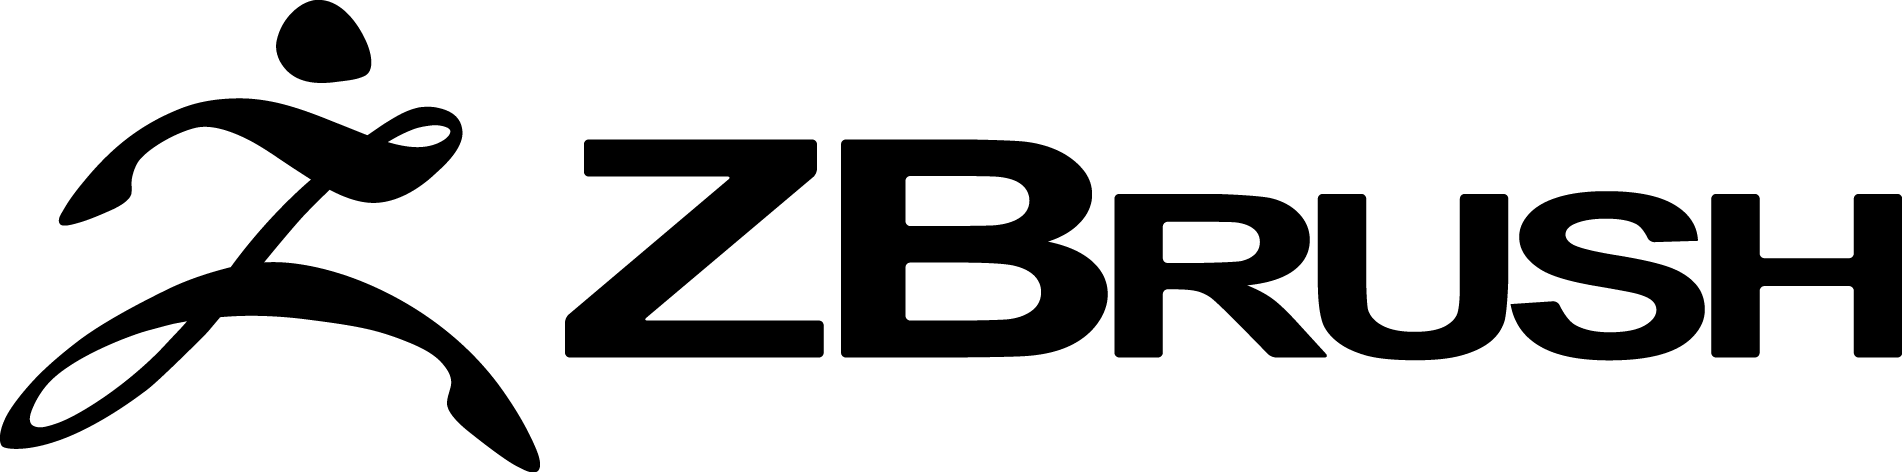 Zbrush Logo png